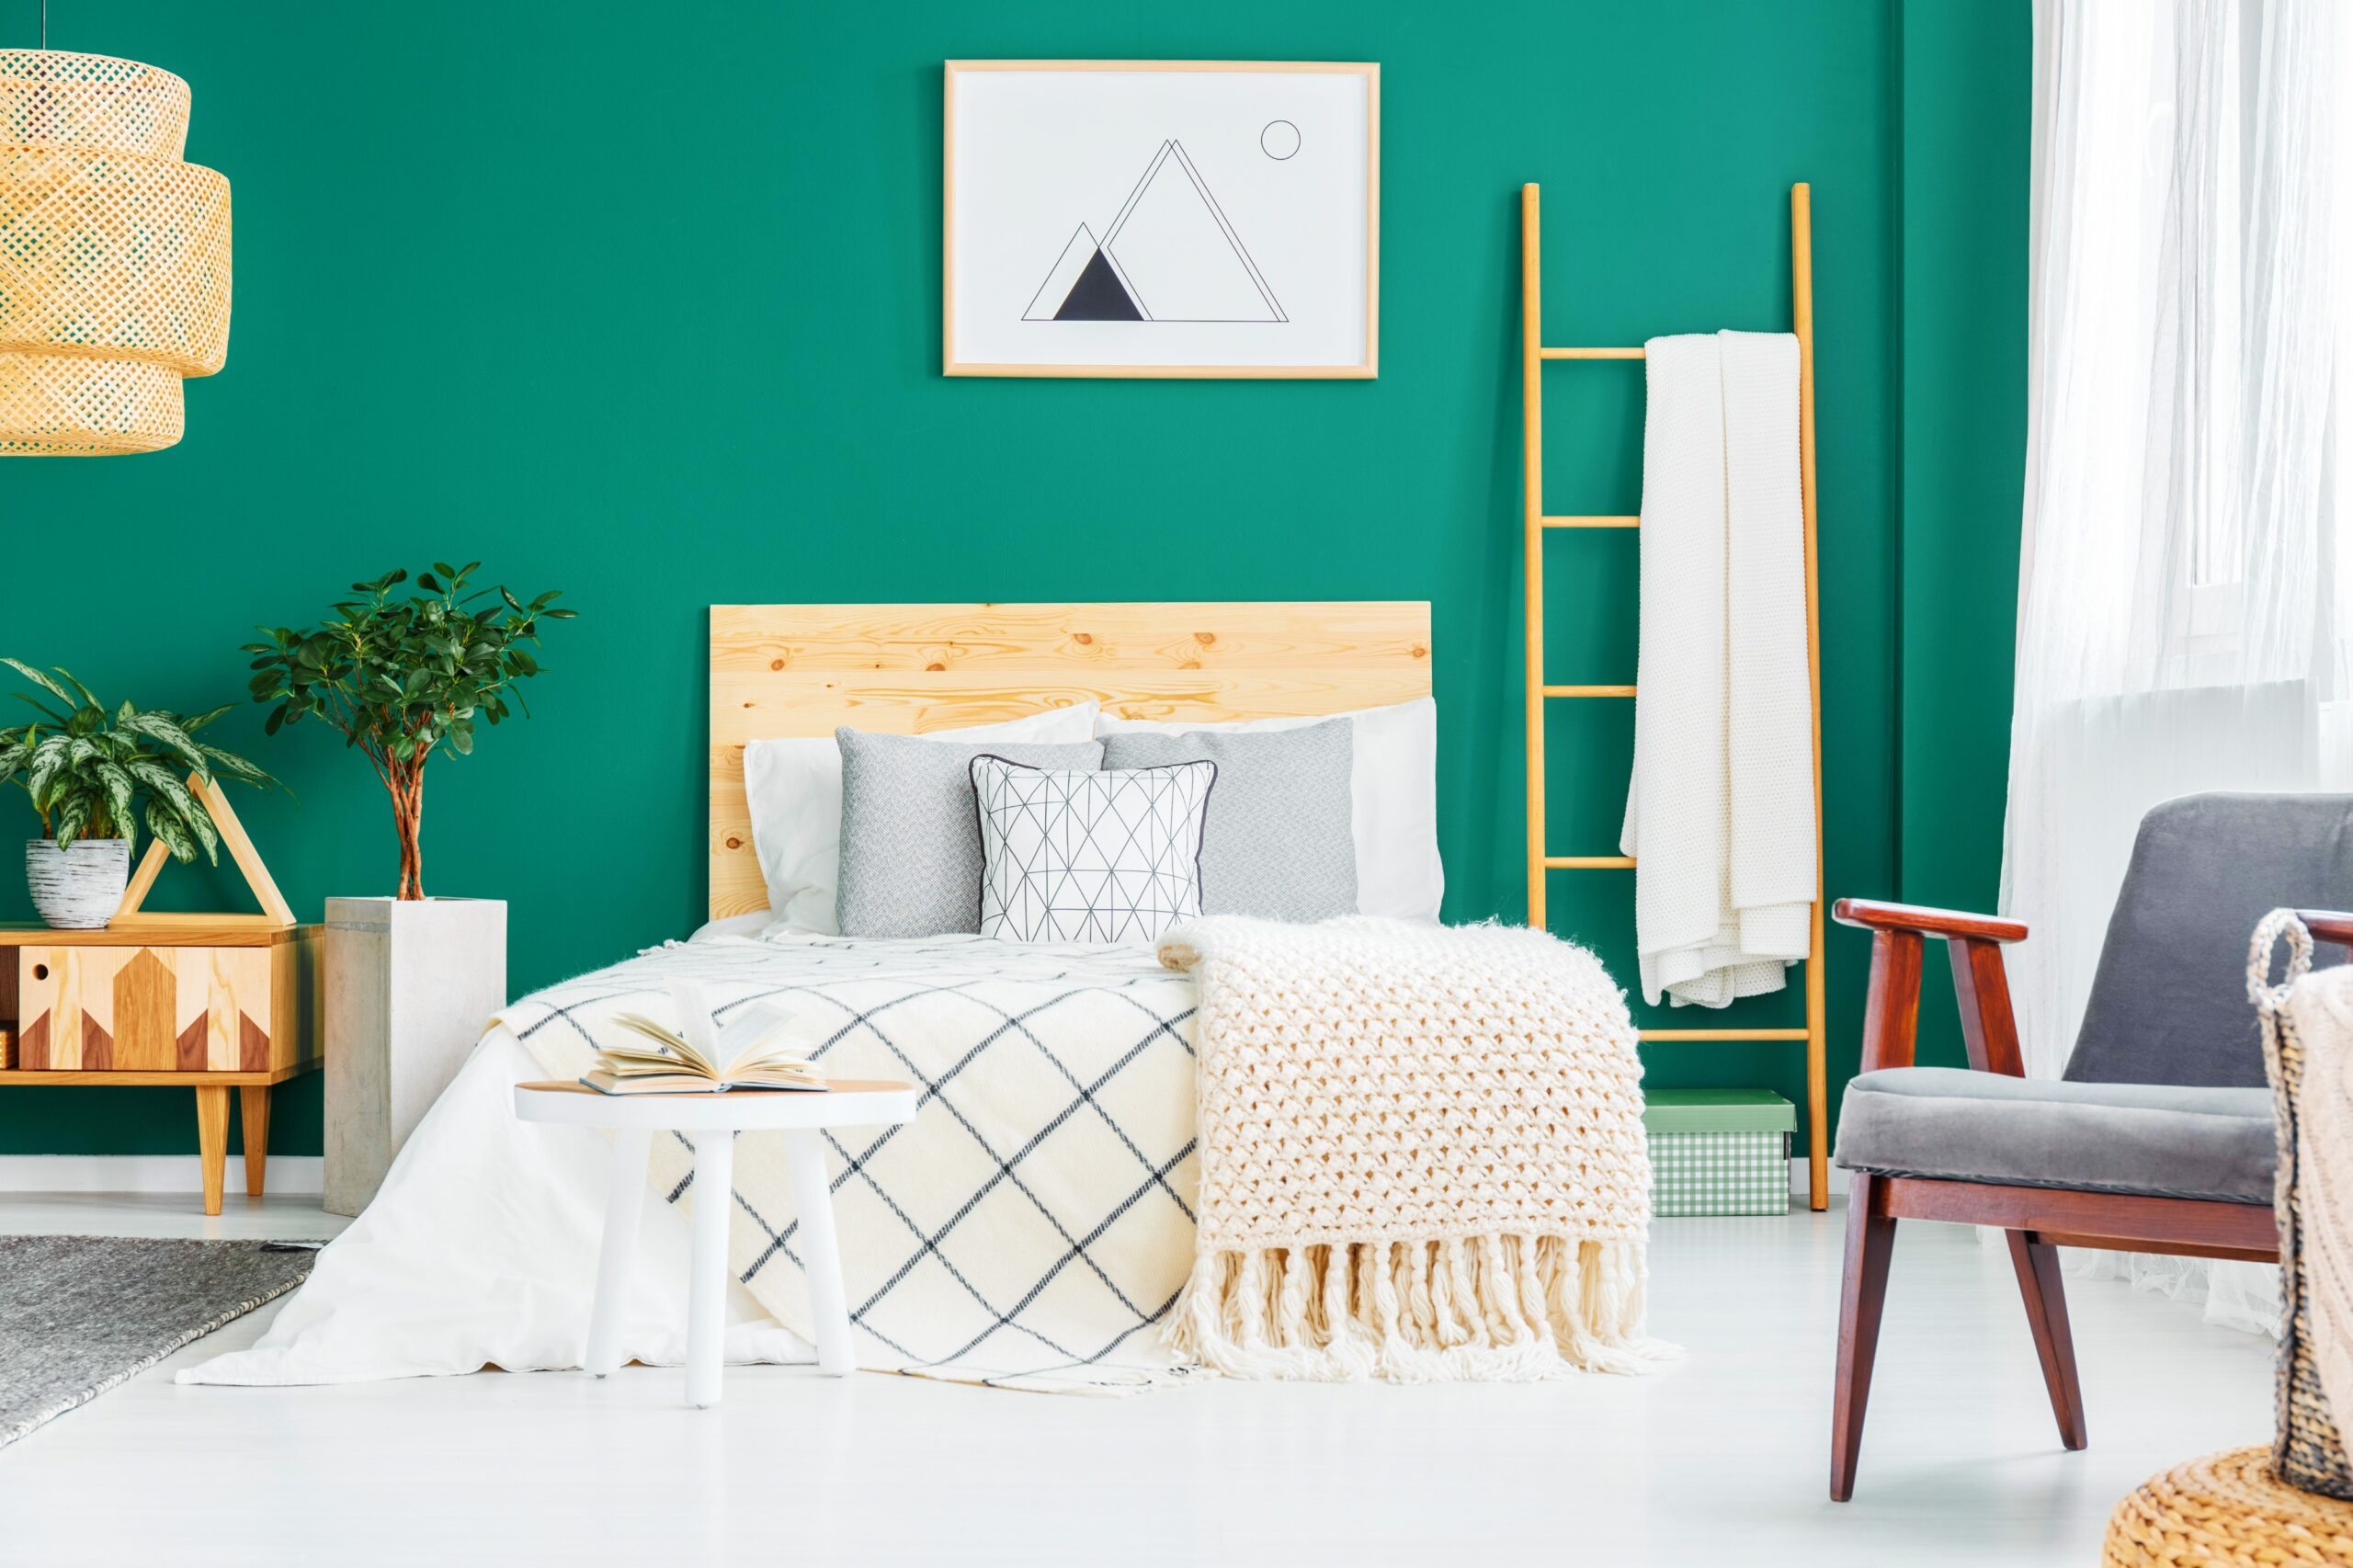 <img src="green.jpg" alt="green colourful bedroom trends"/> 